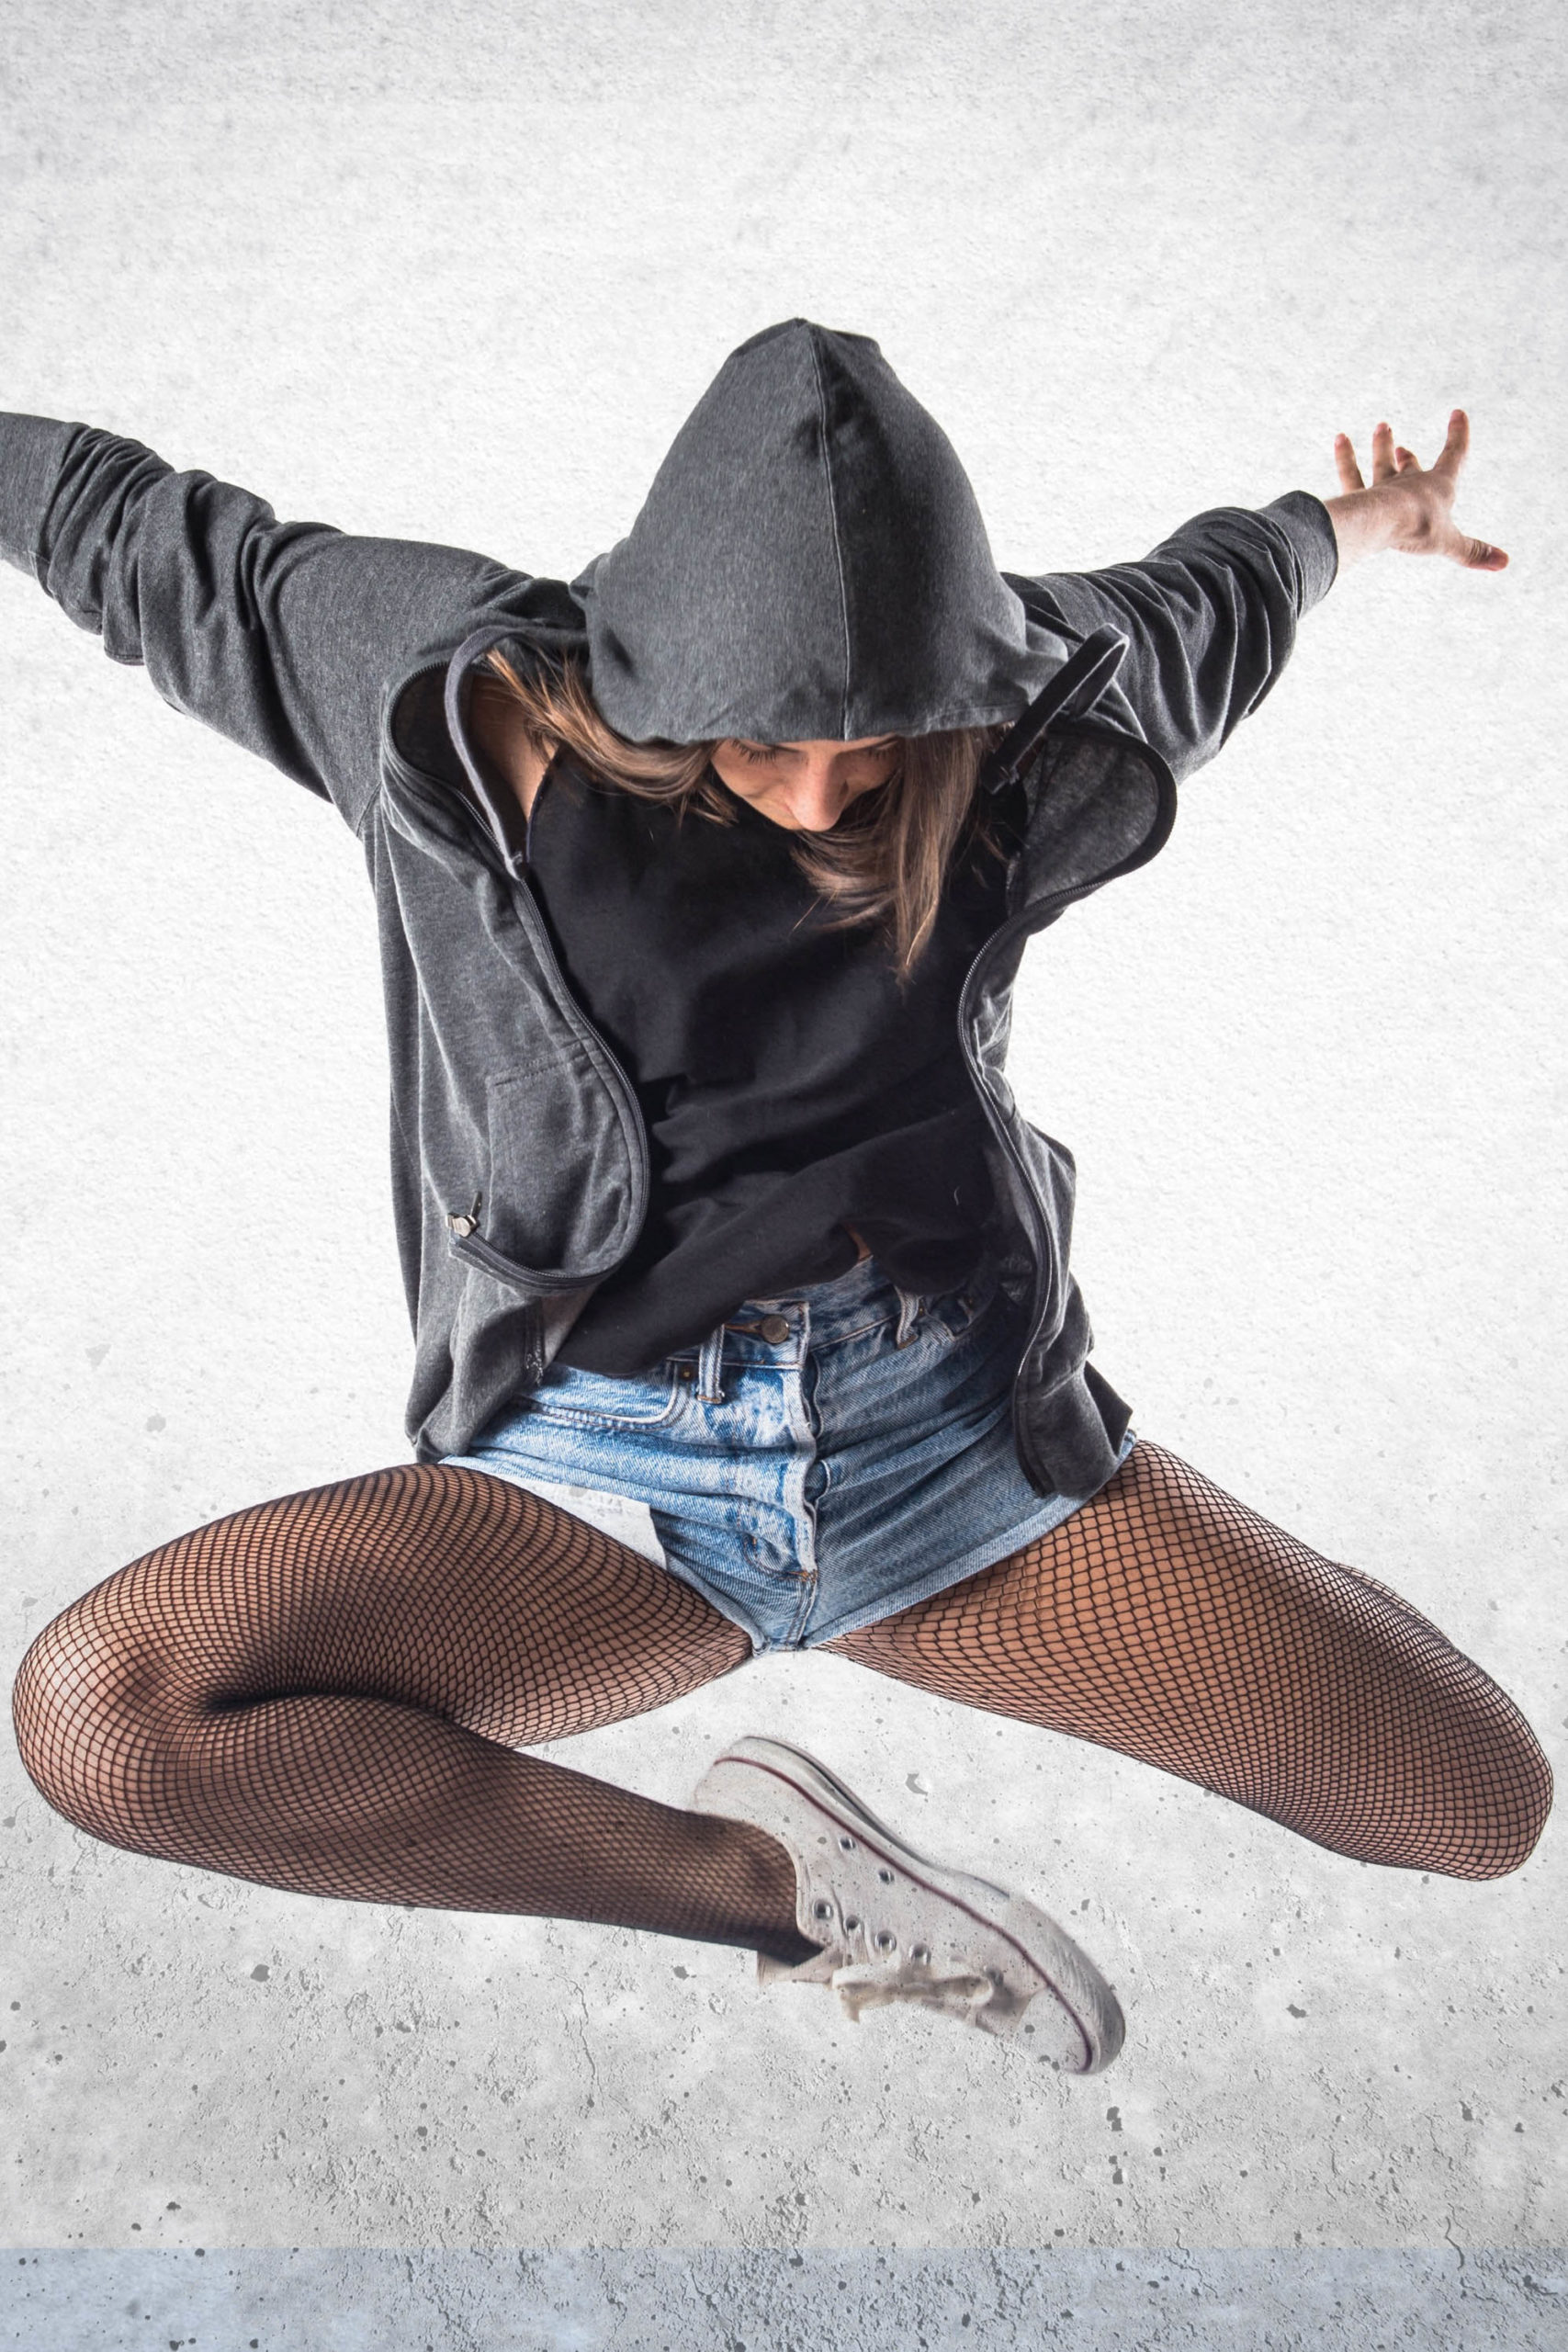 Teenager hip-hop dancer jumping